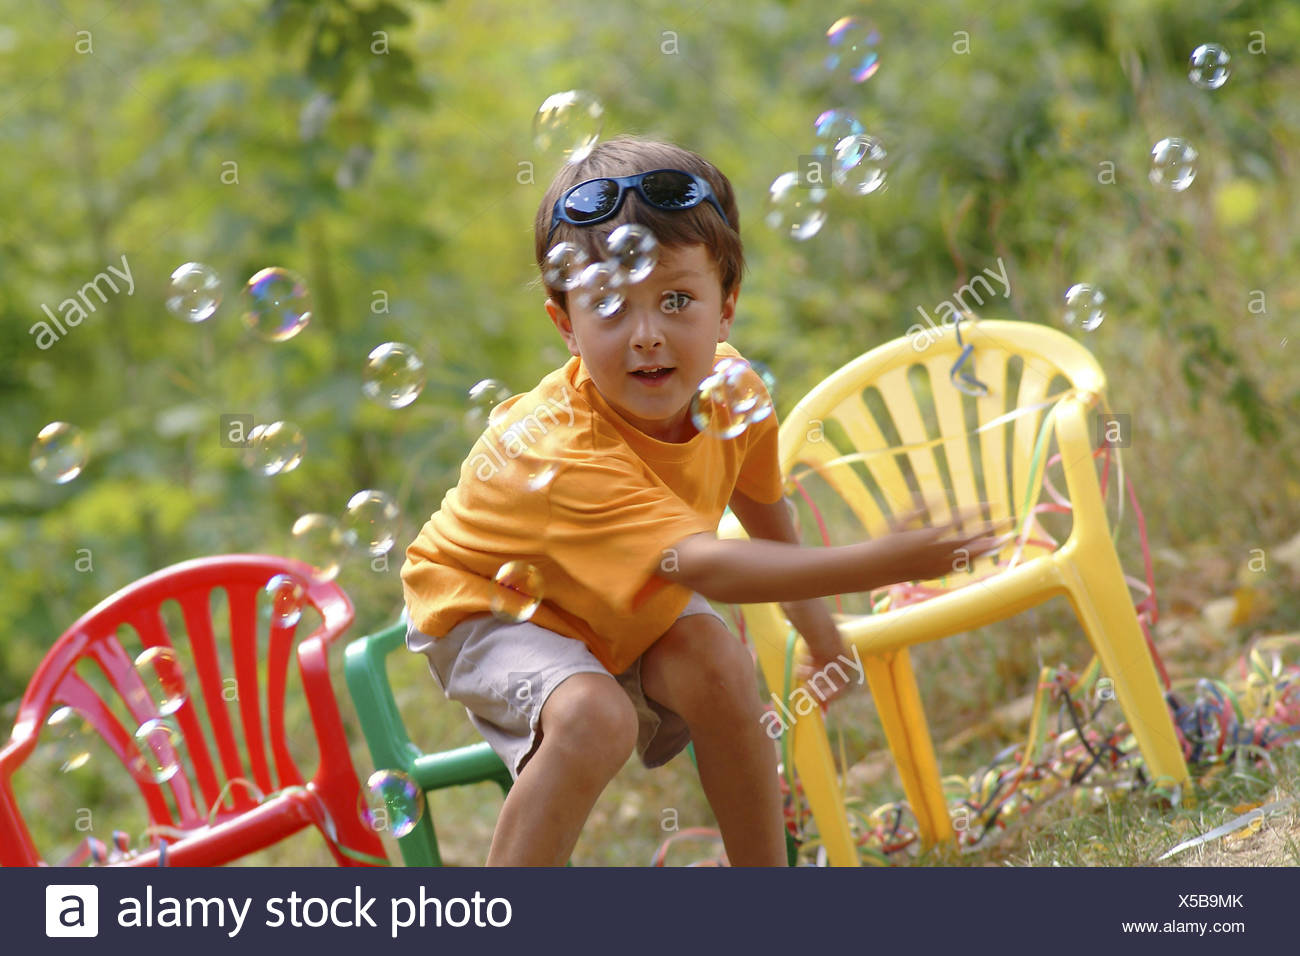 kids plastic garden chairs